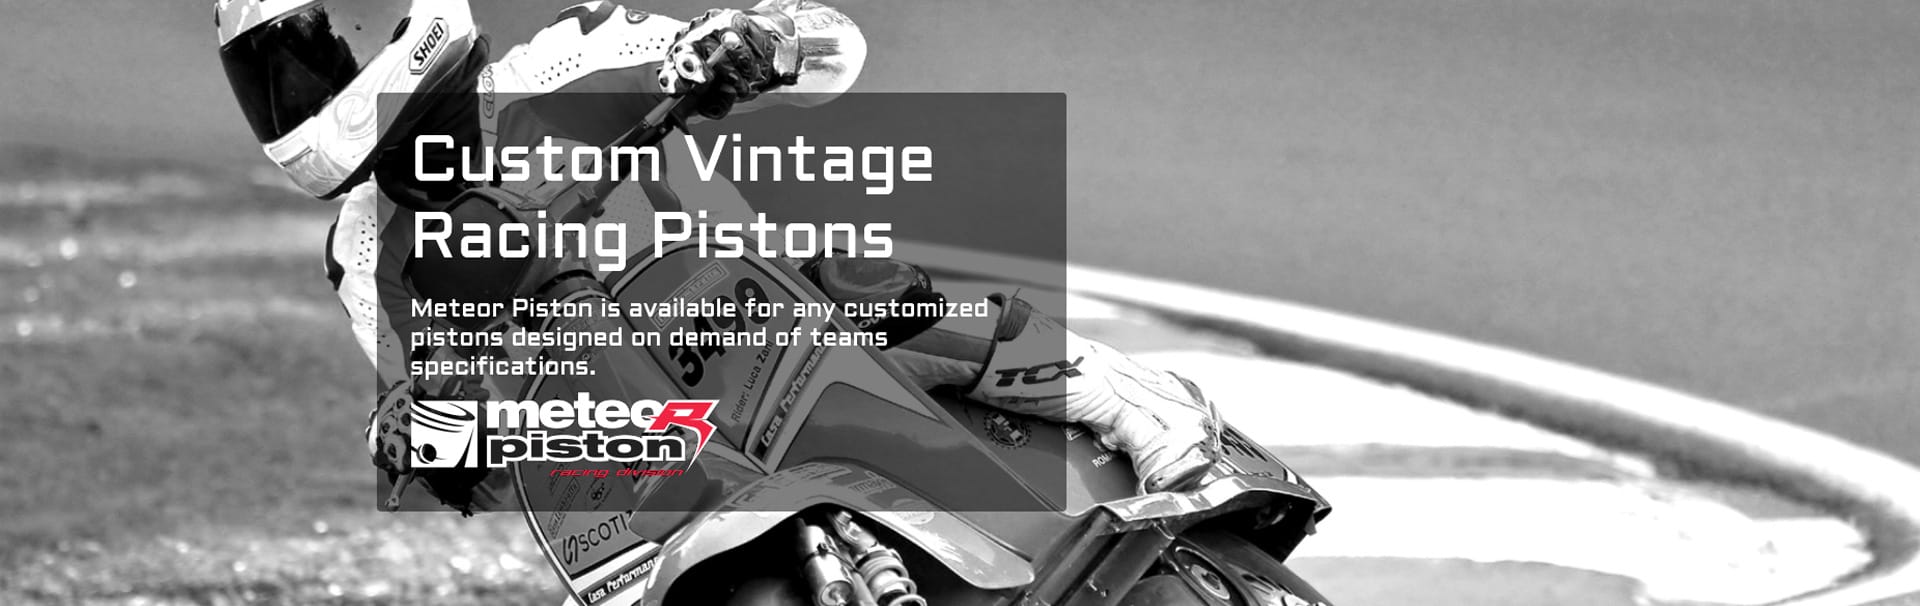 Meteor Vintage Piston Scooter Kollben Shop